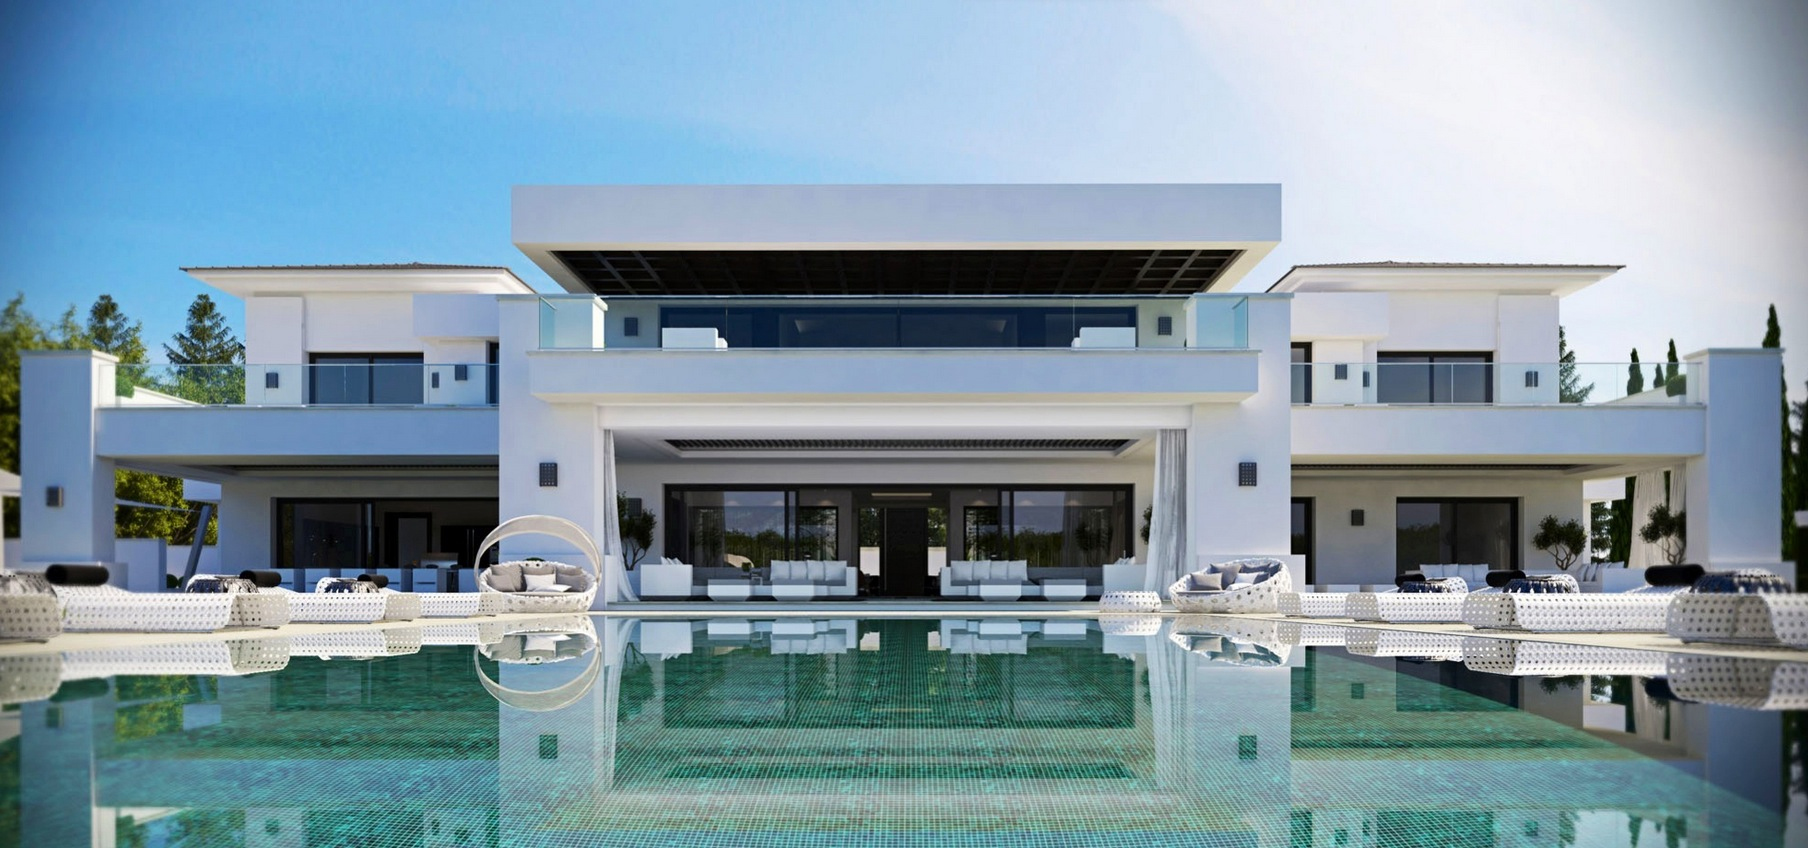 Luxurious 9 Bedroom Spanish Home With Indoor & Outdoor Pools 2